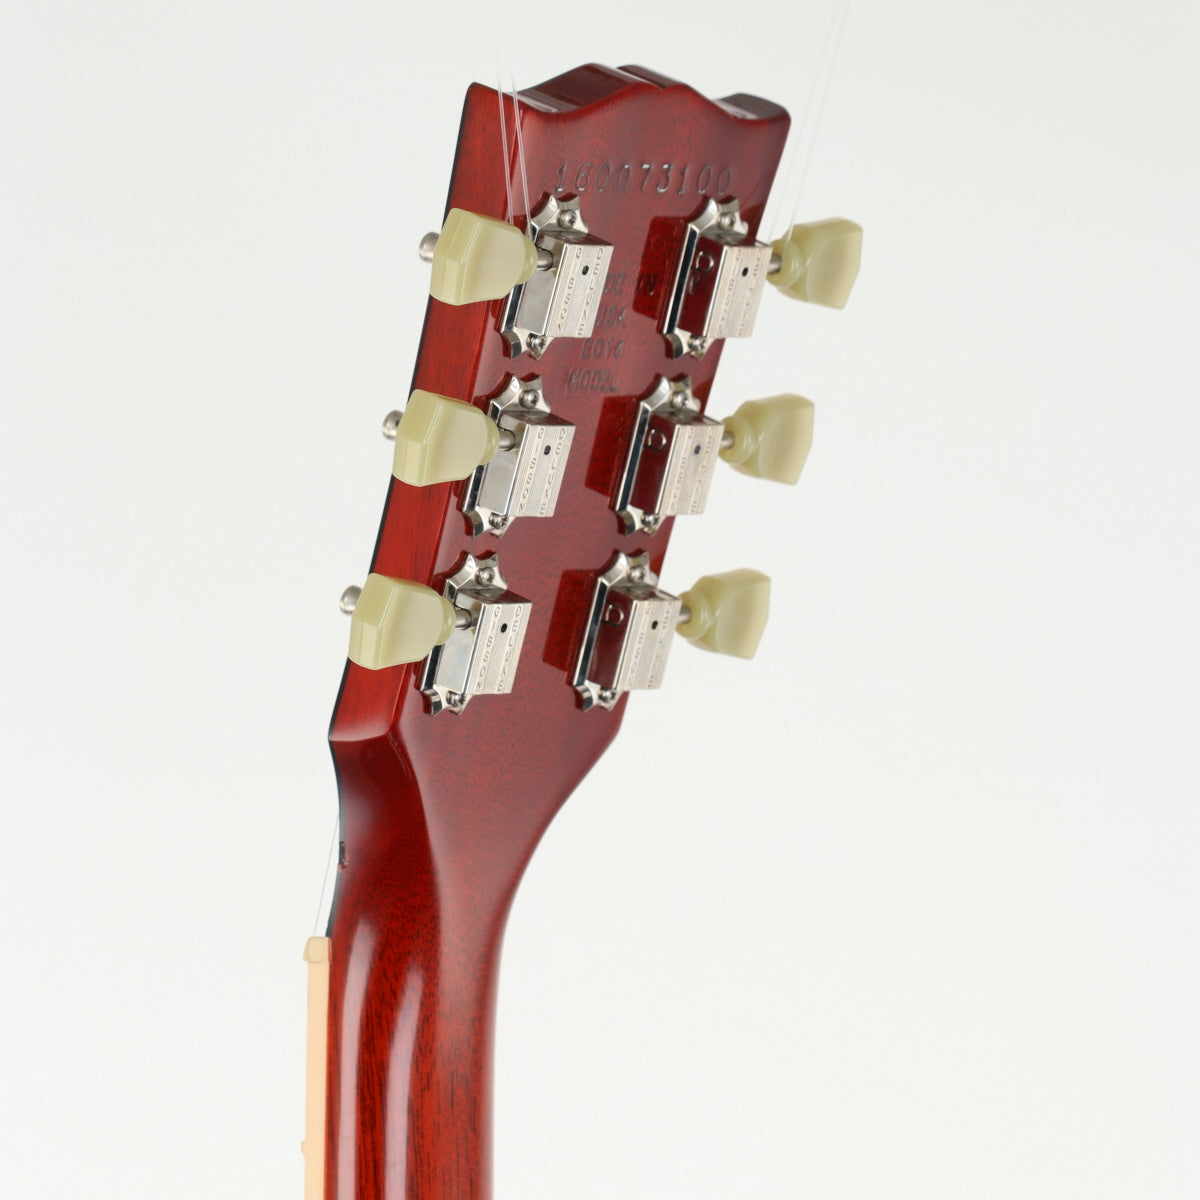 [SN 1600073100] USED Gibson USA / Les Paul Traditional 2016 Cherry Sunburst [11]